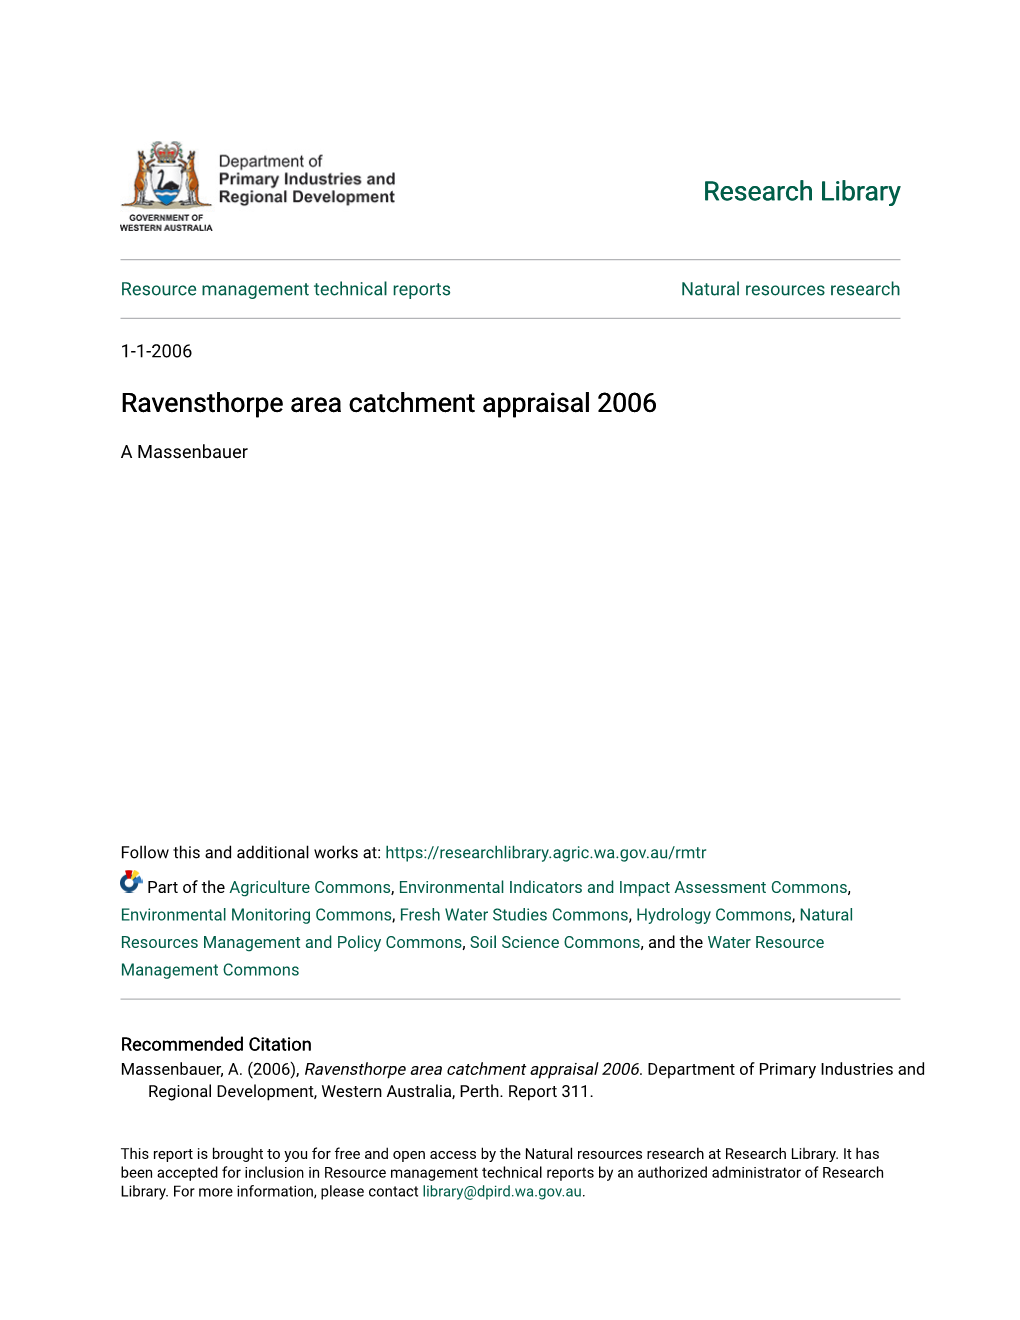 Ravensthorpe Area Catchment Appraisal 2006